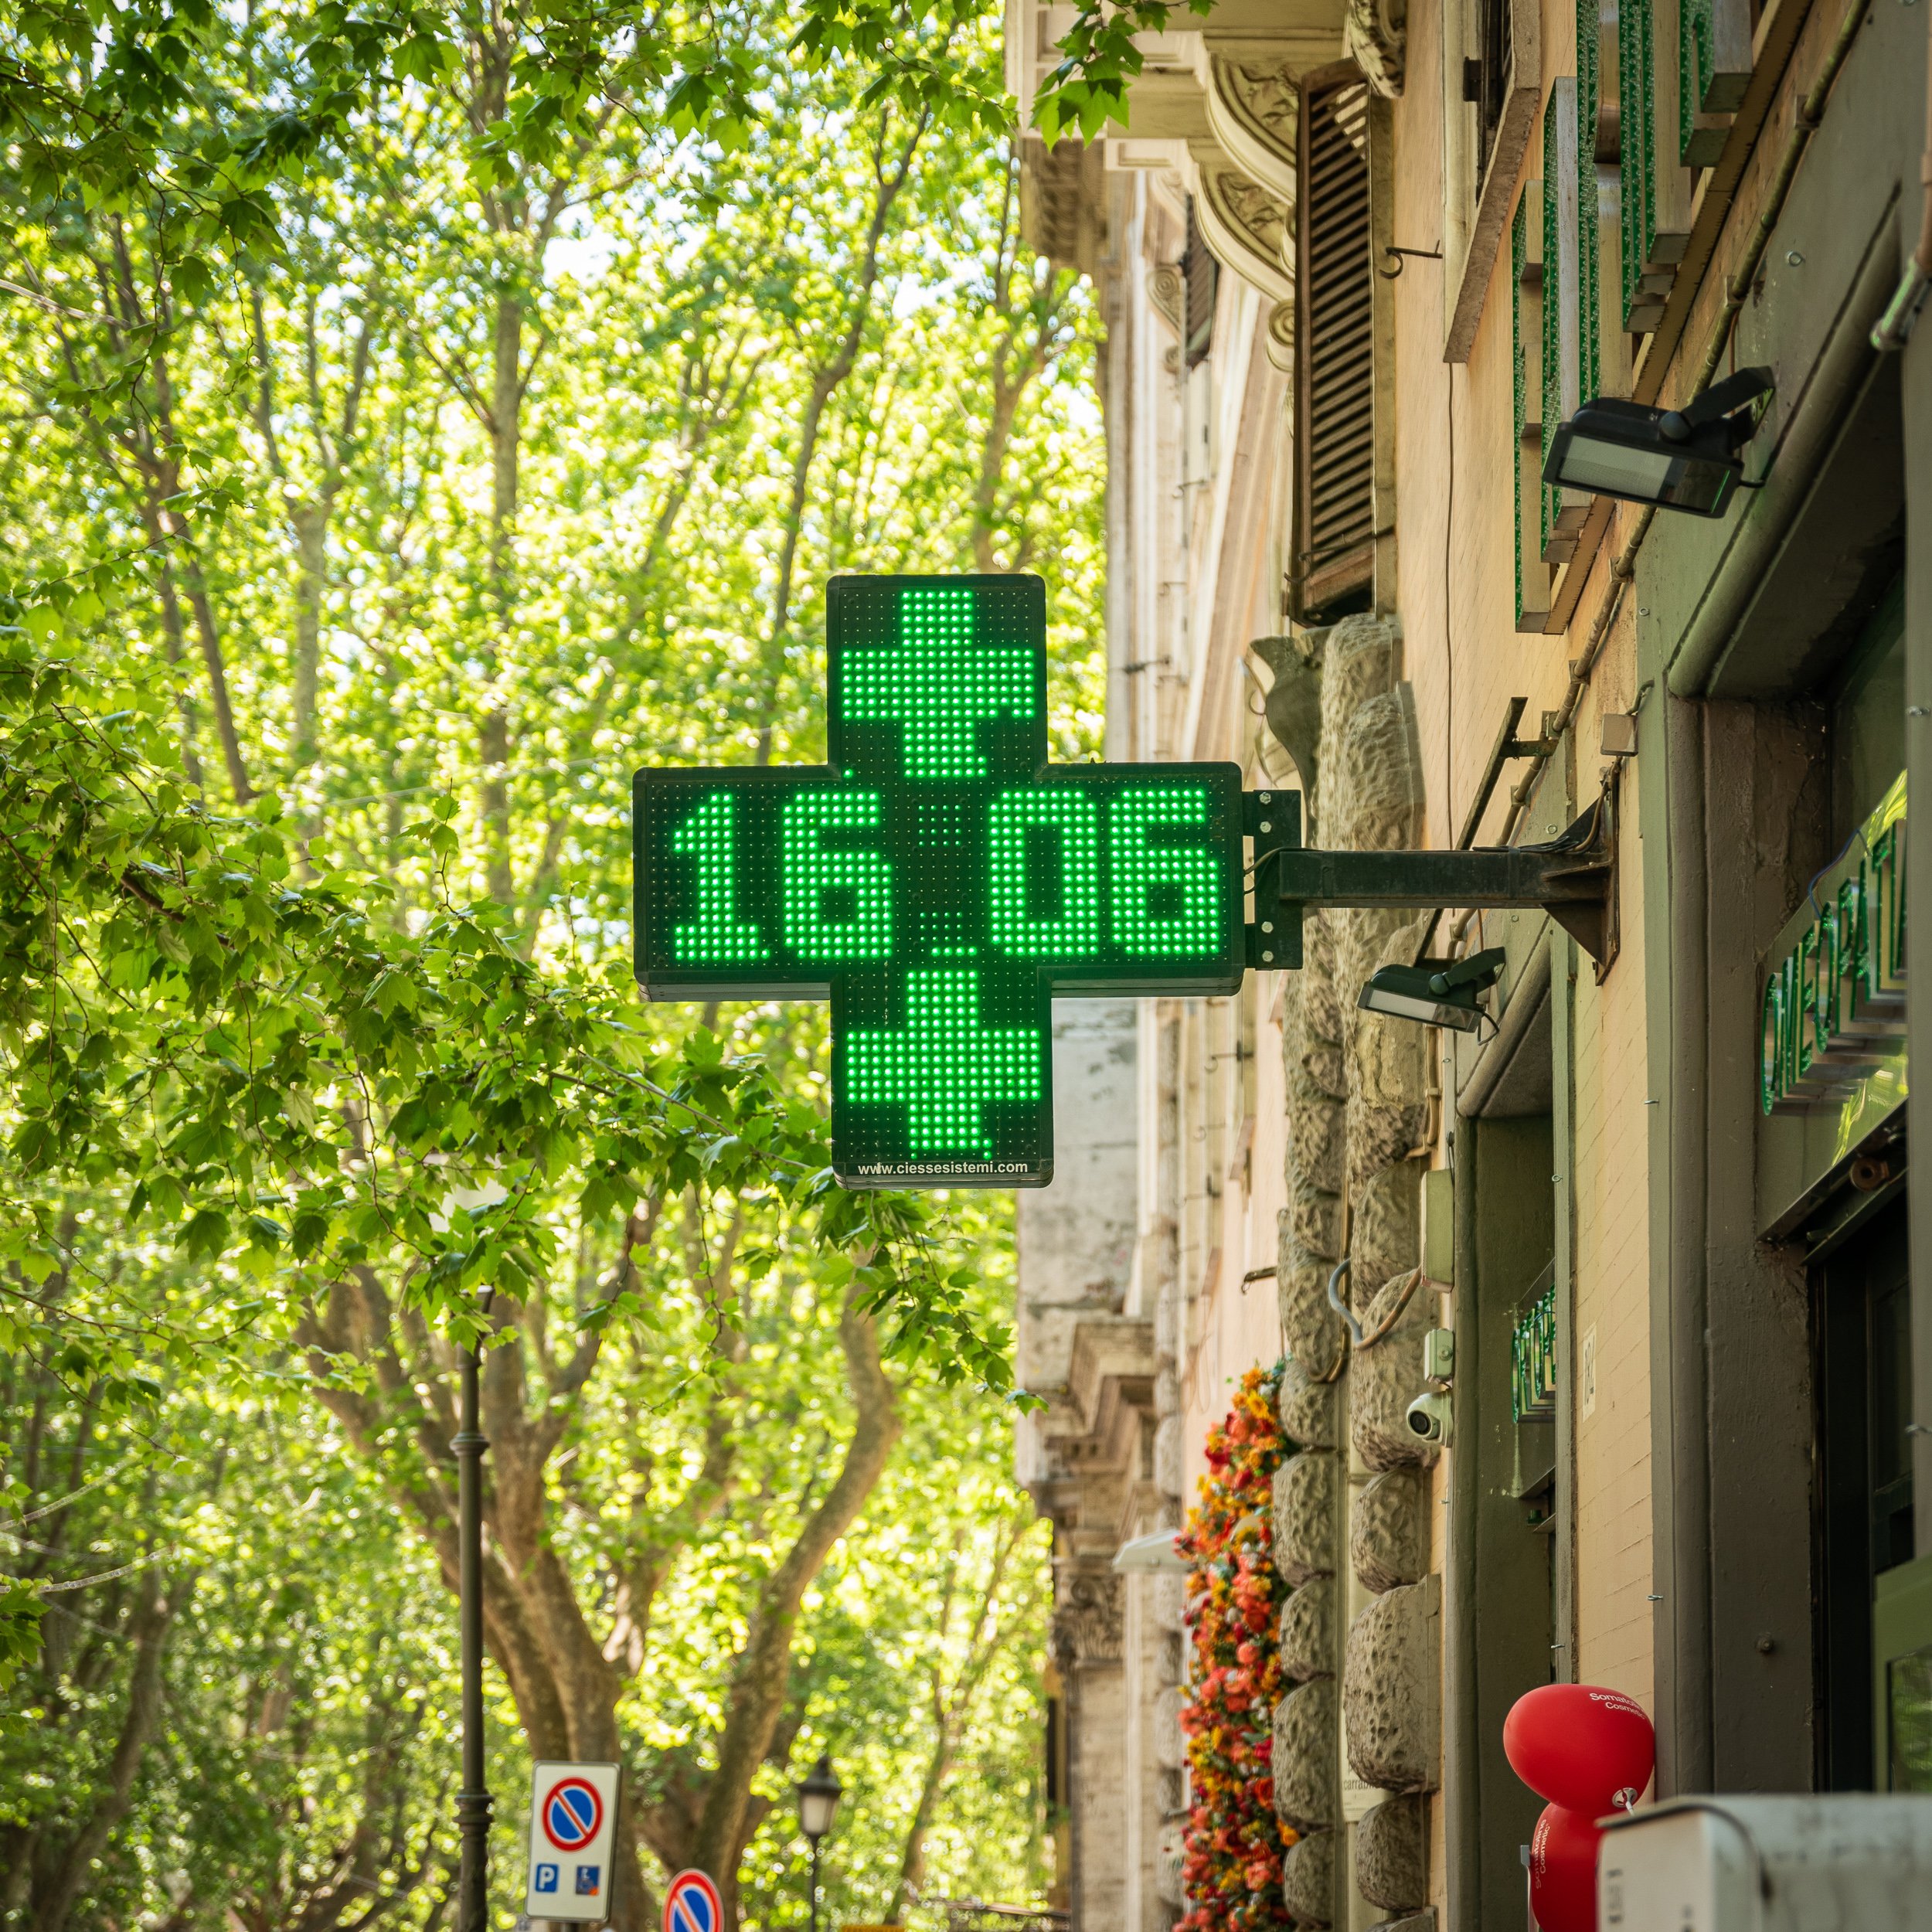 Pharmacies In Italy - The Green Cross